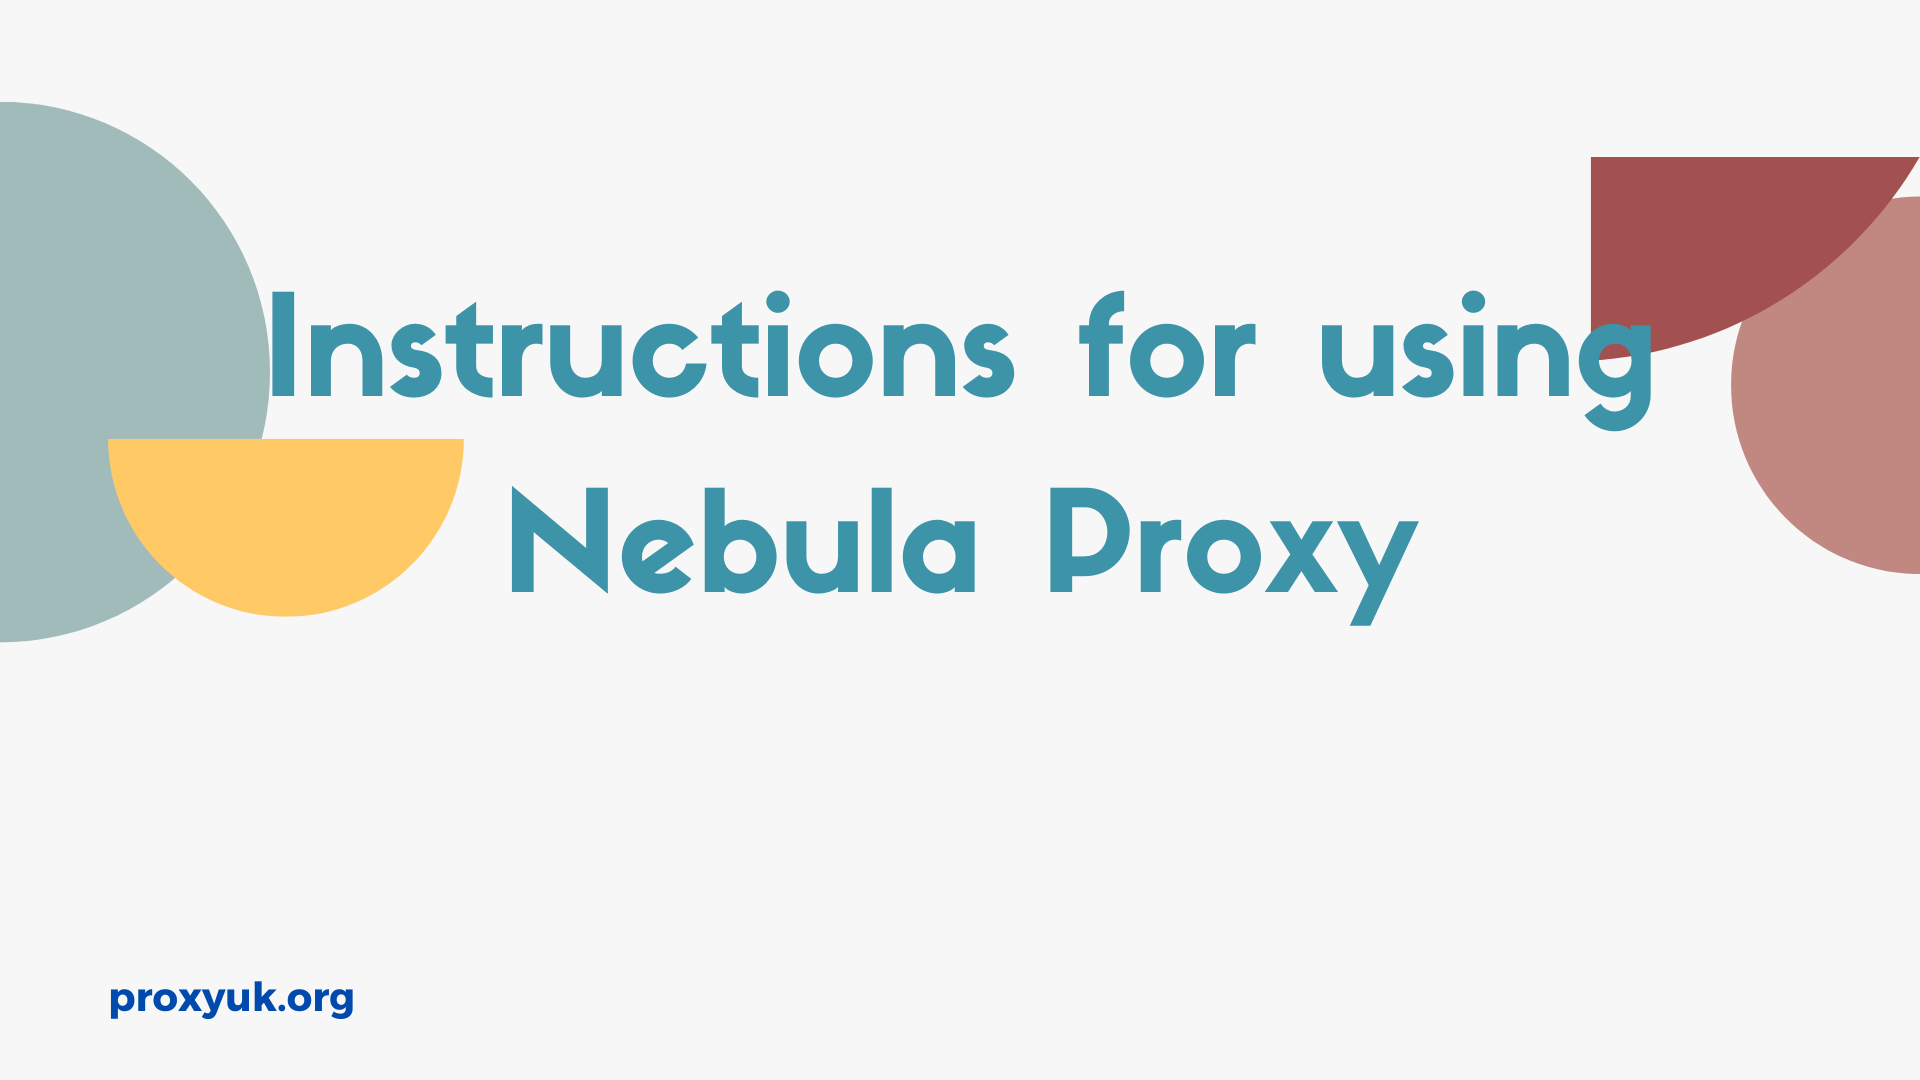 Instructions for using Nebula Proxy